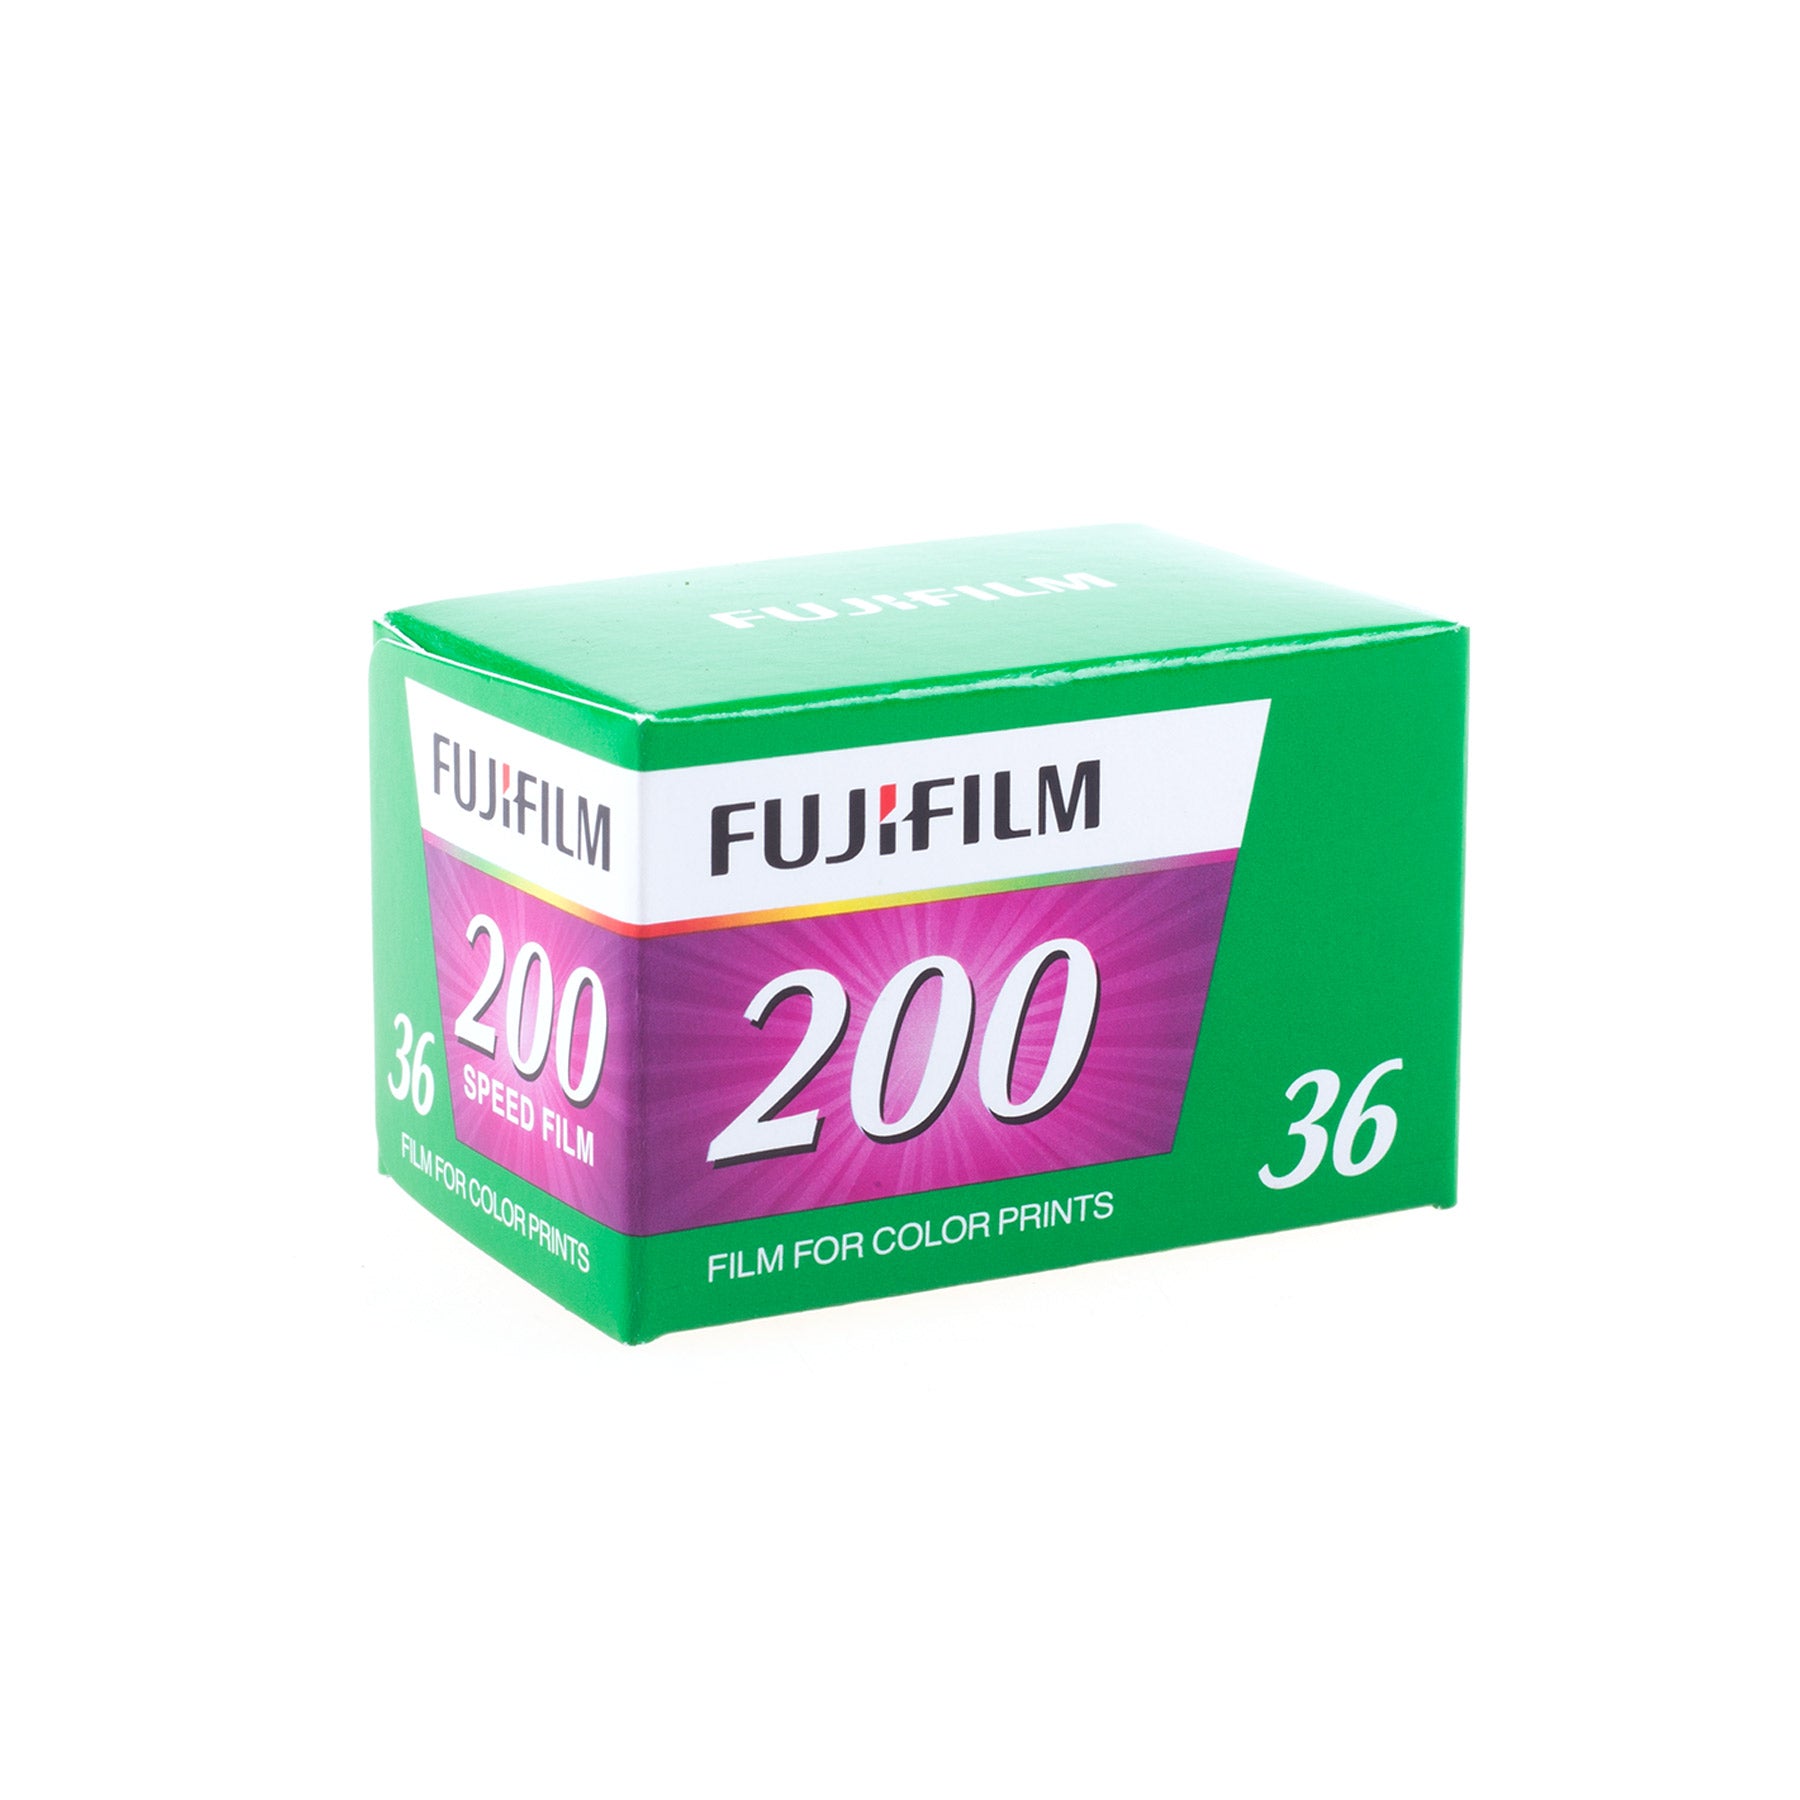 Fujicolor 200 – dubblefilm